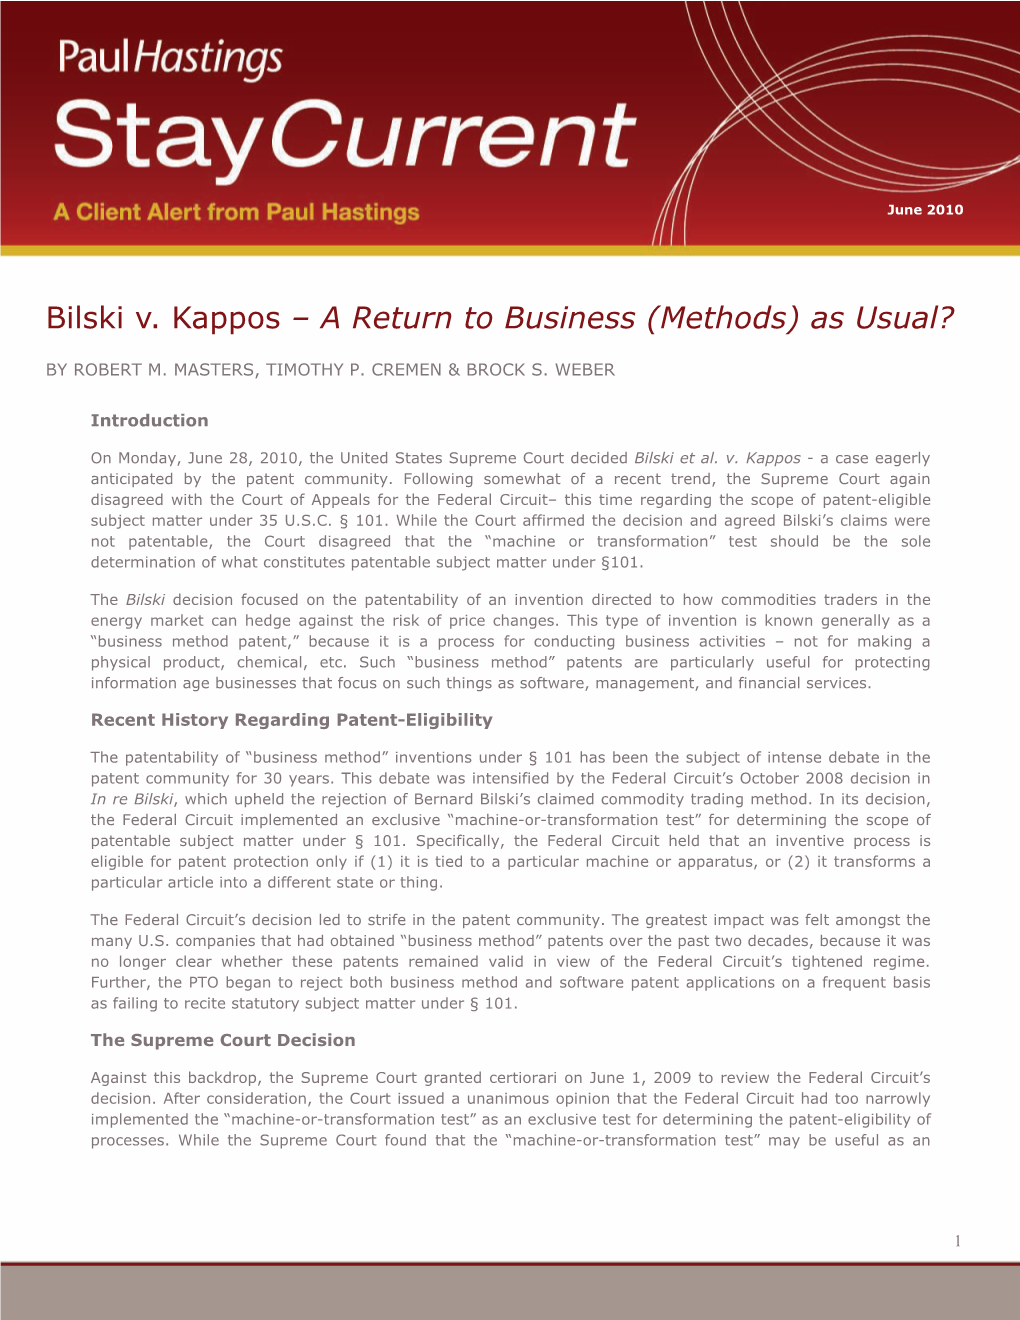 Bilski V. Kappos – a Return to Business (Methods) As Usual?